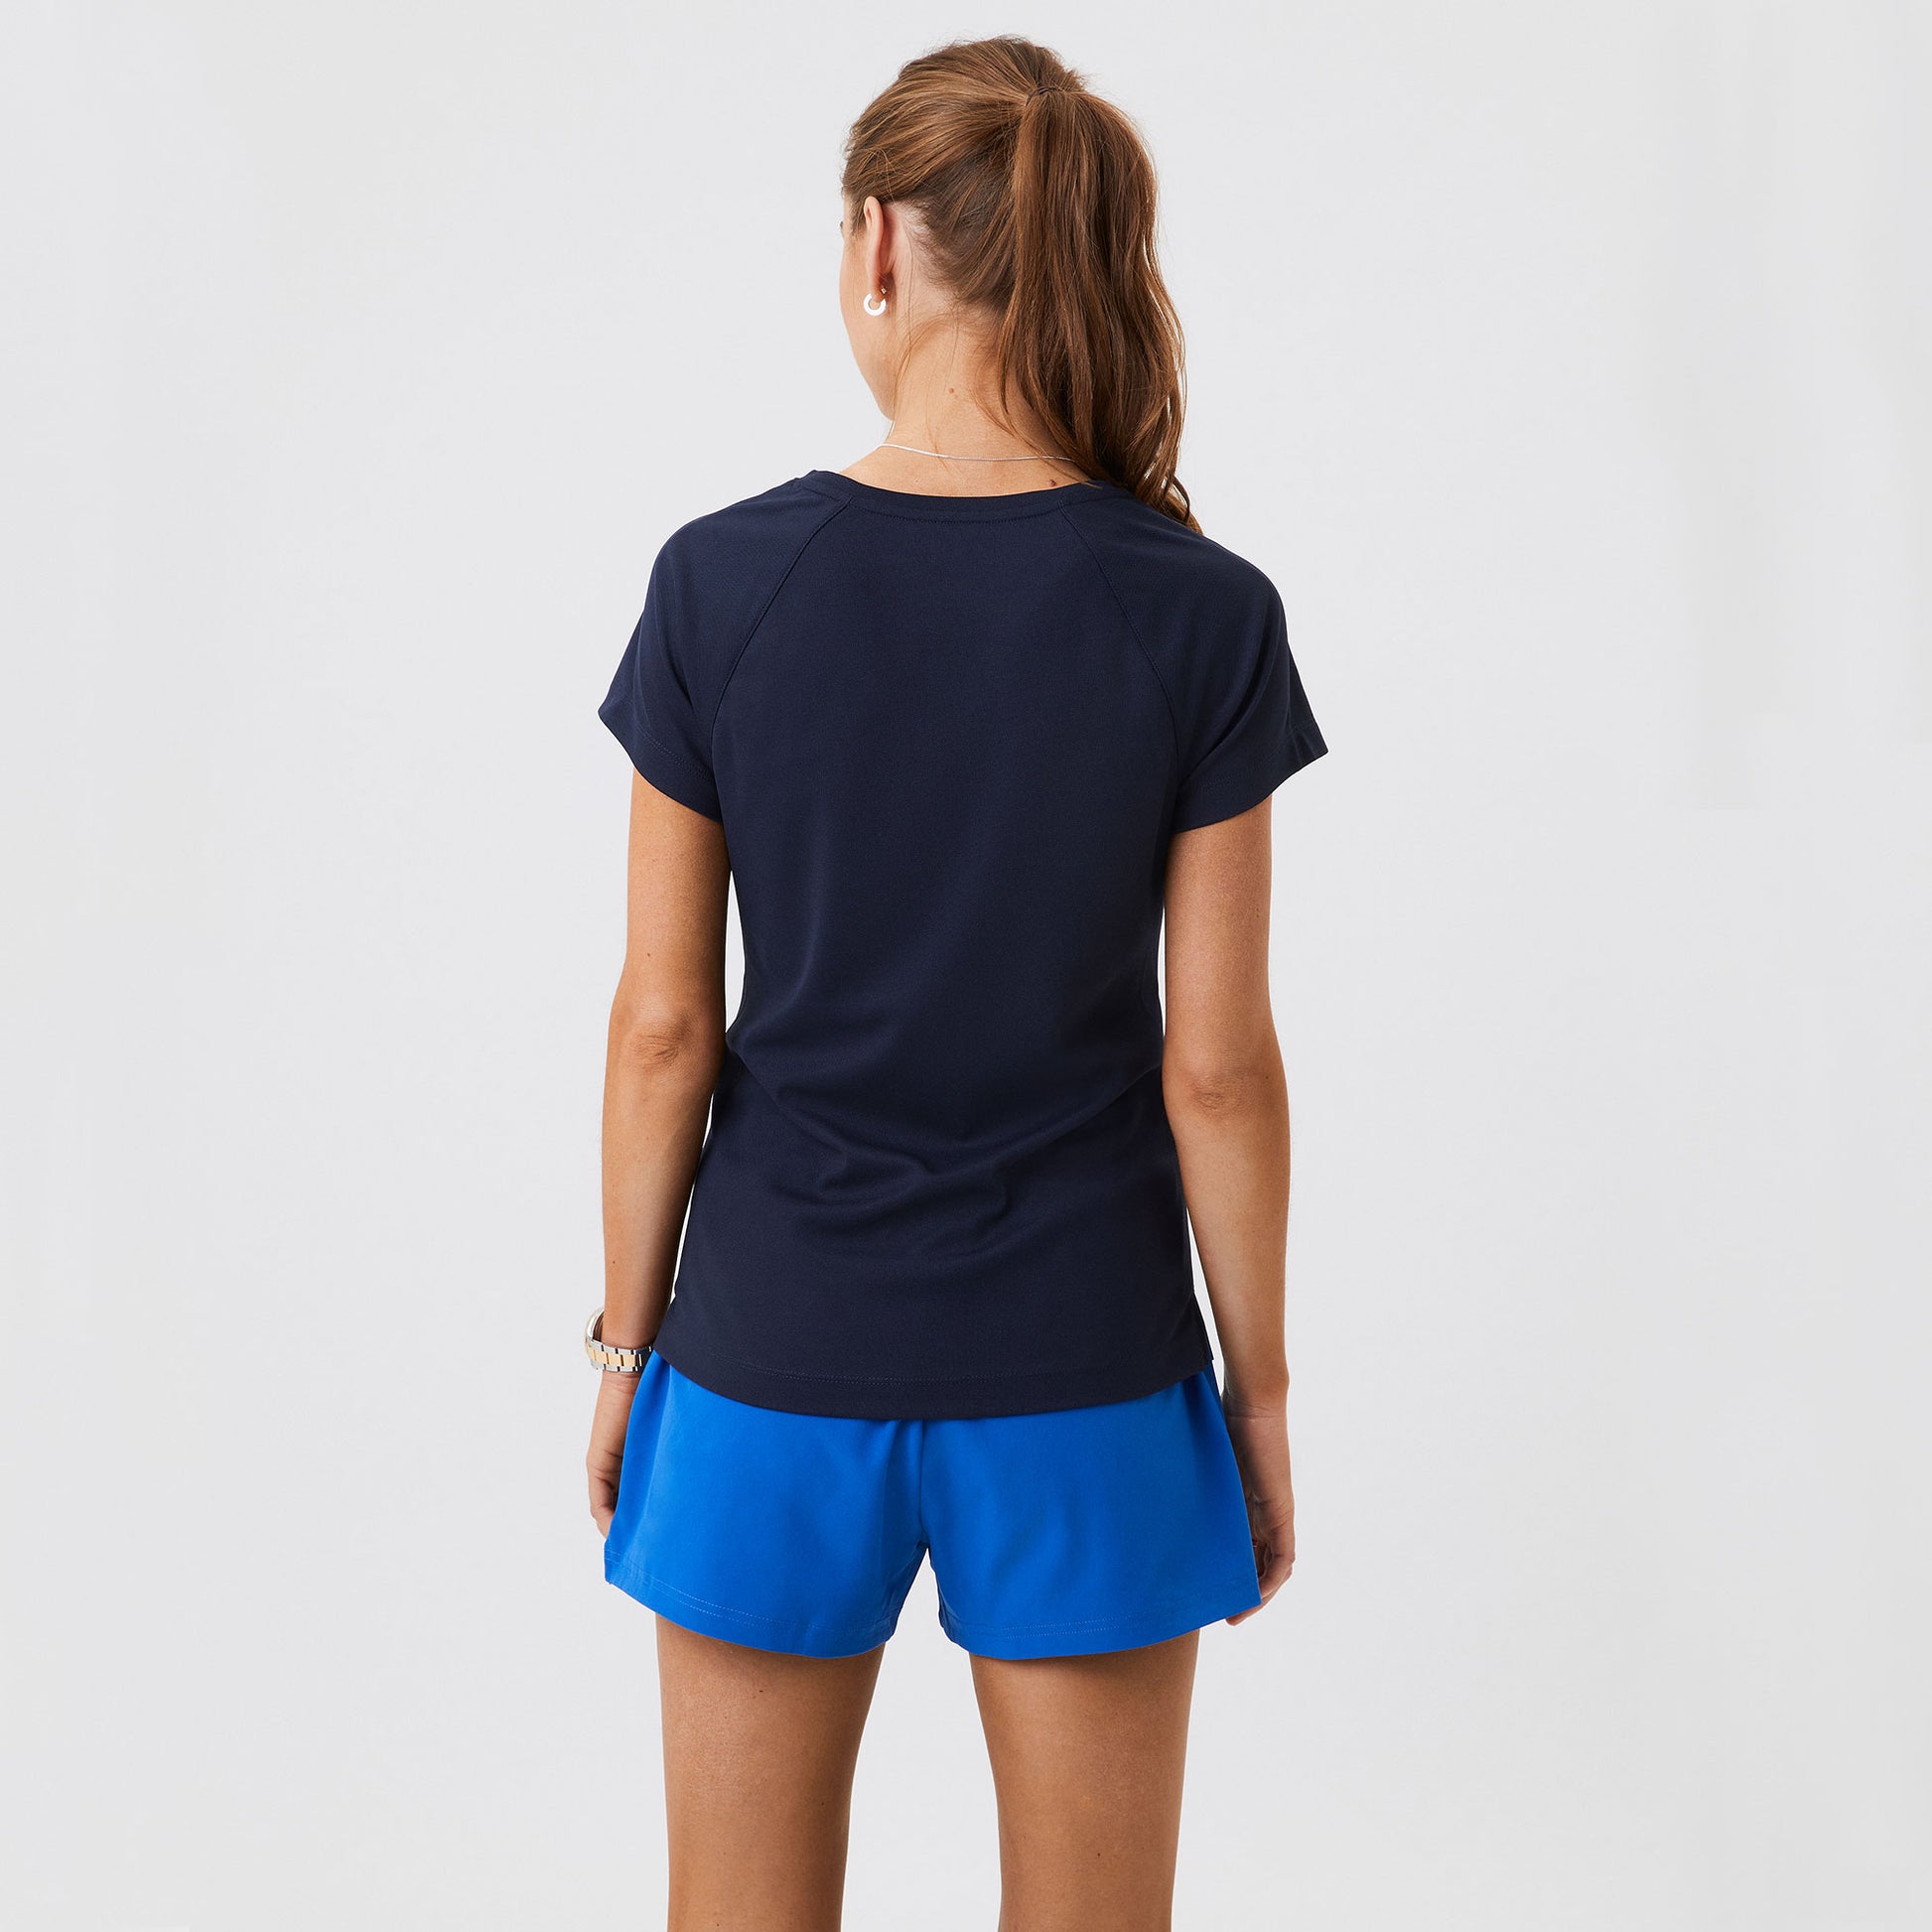 Björn Borg Ace Women's Tennis Shirt Dark Blue (2)